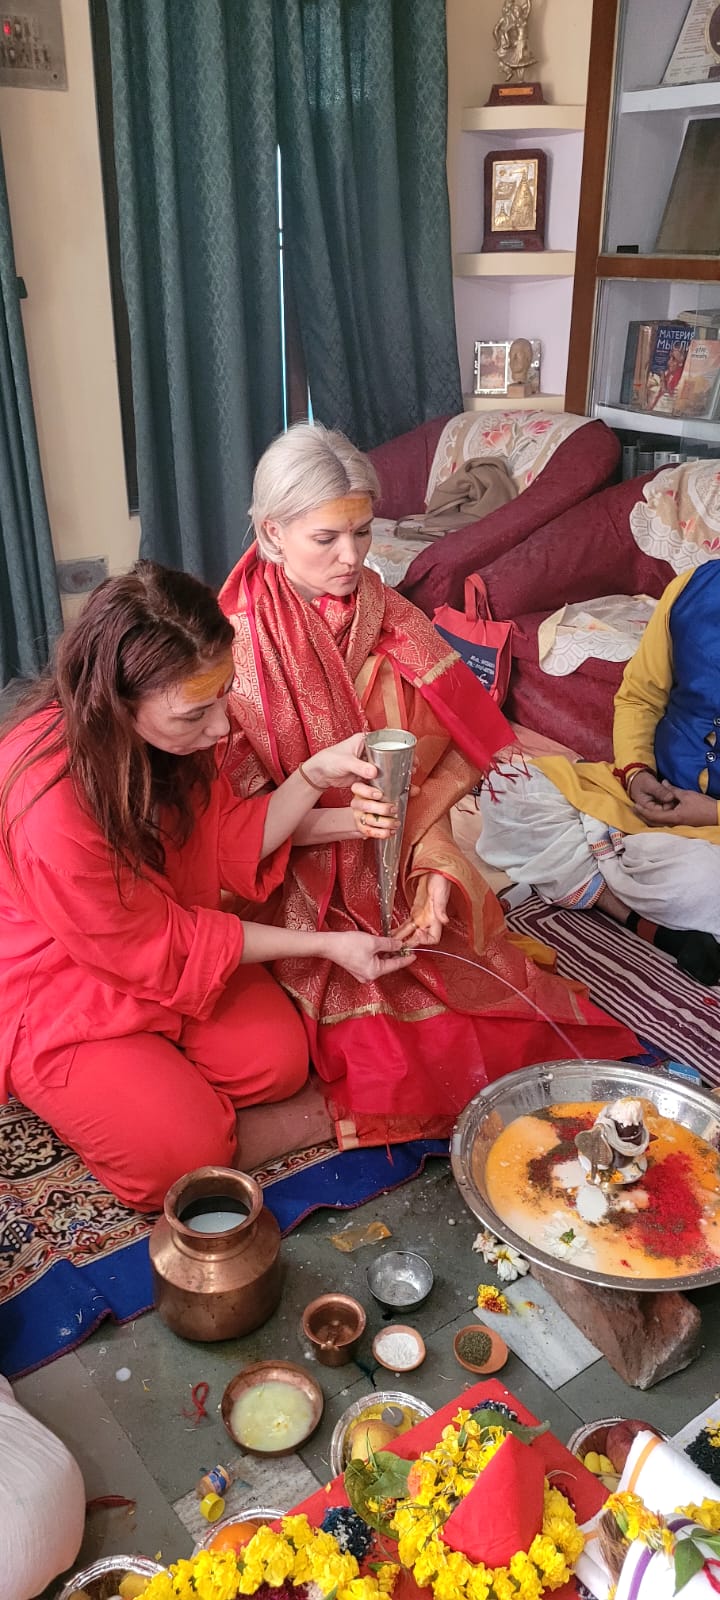 Russian woman Idga Barados adopted Hindu religion in Varanasi